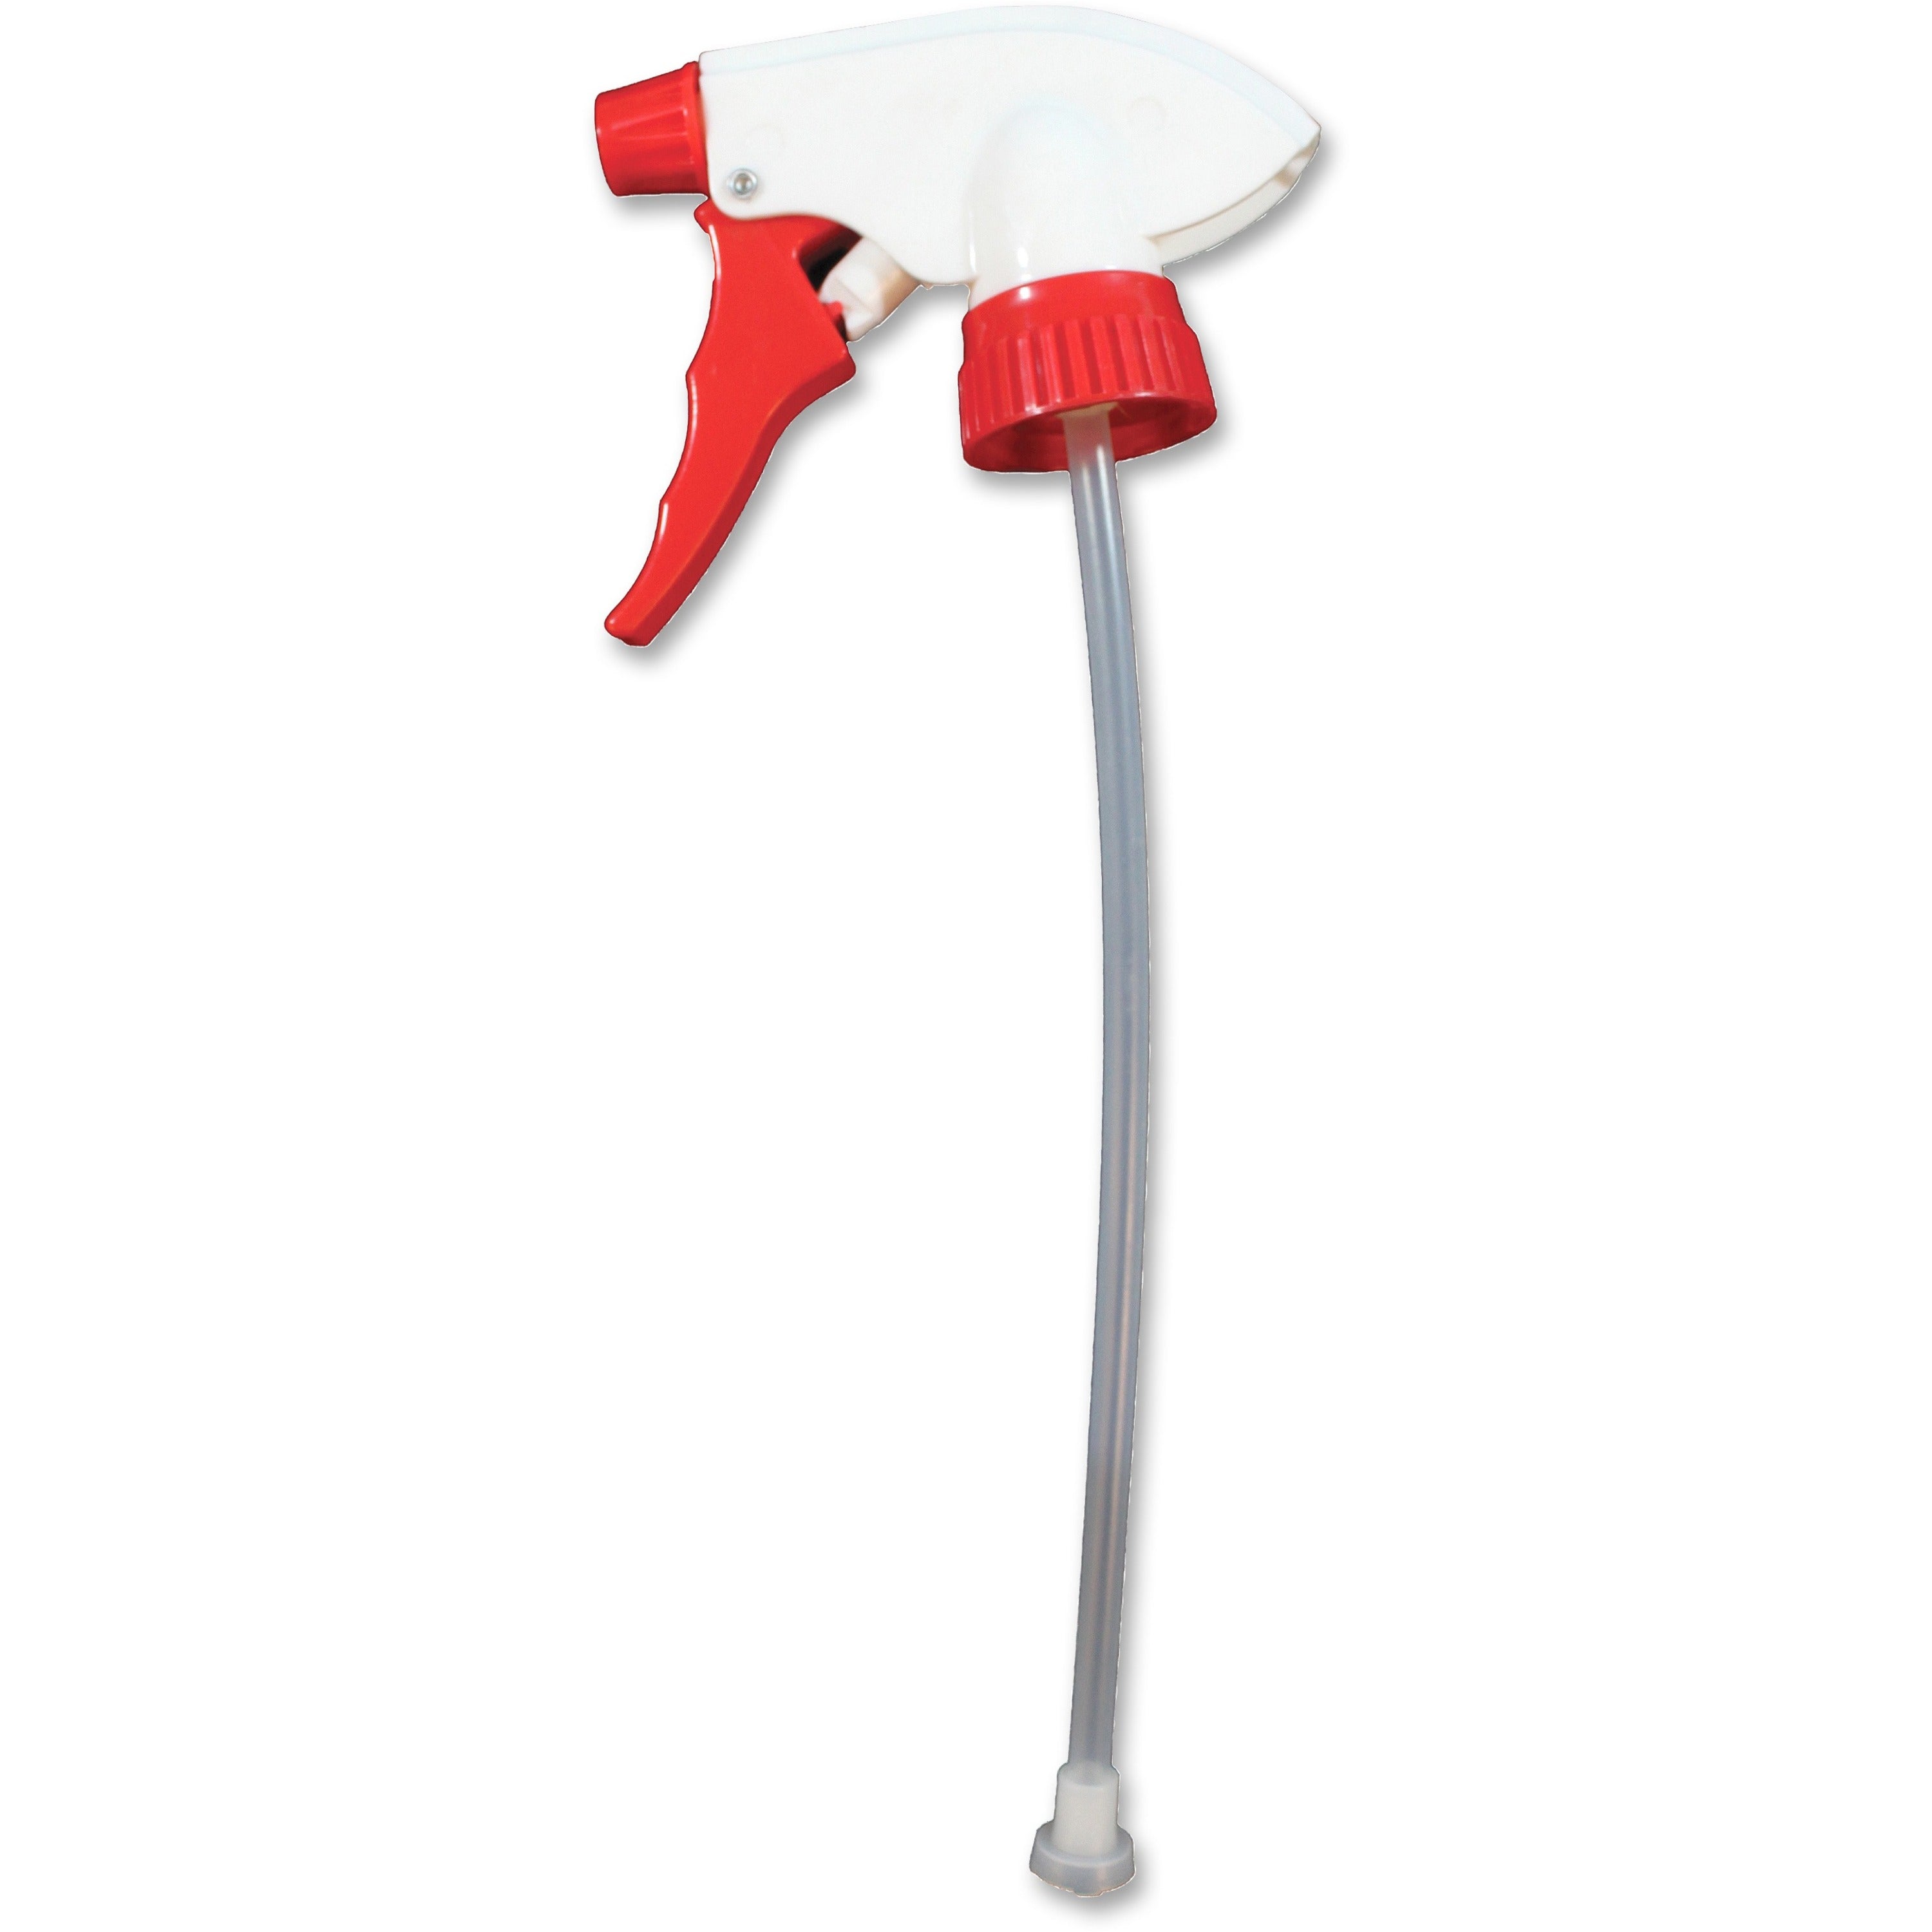 Genuine Joe Standard Trigger Sprayer - 8.13" - 24 / Carton - Red, White - 